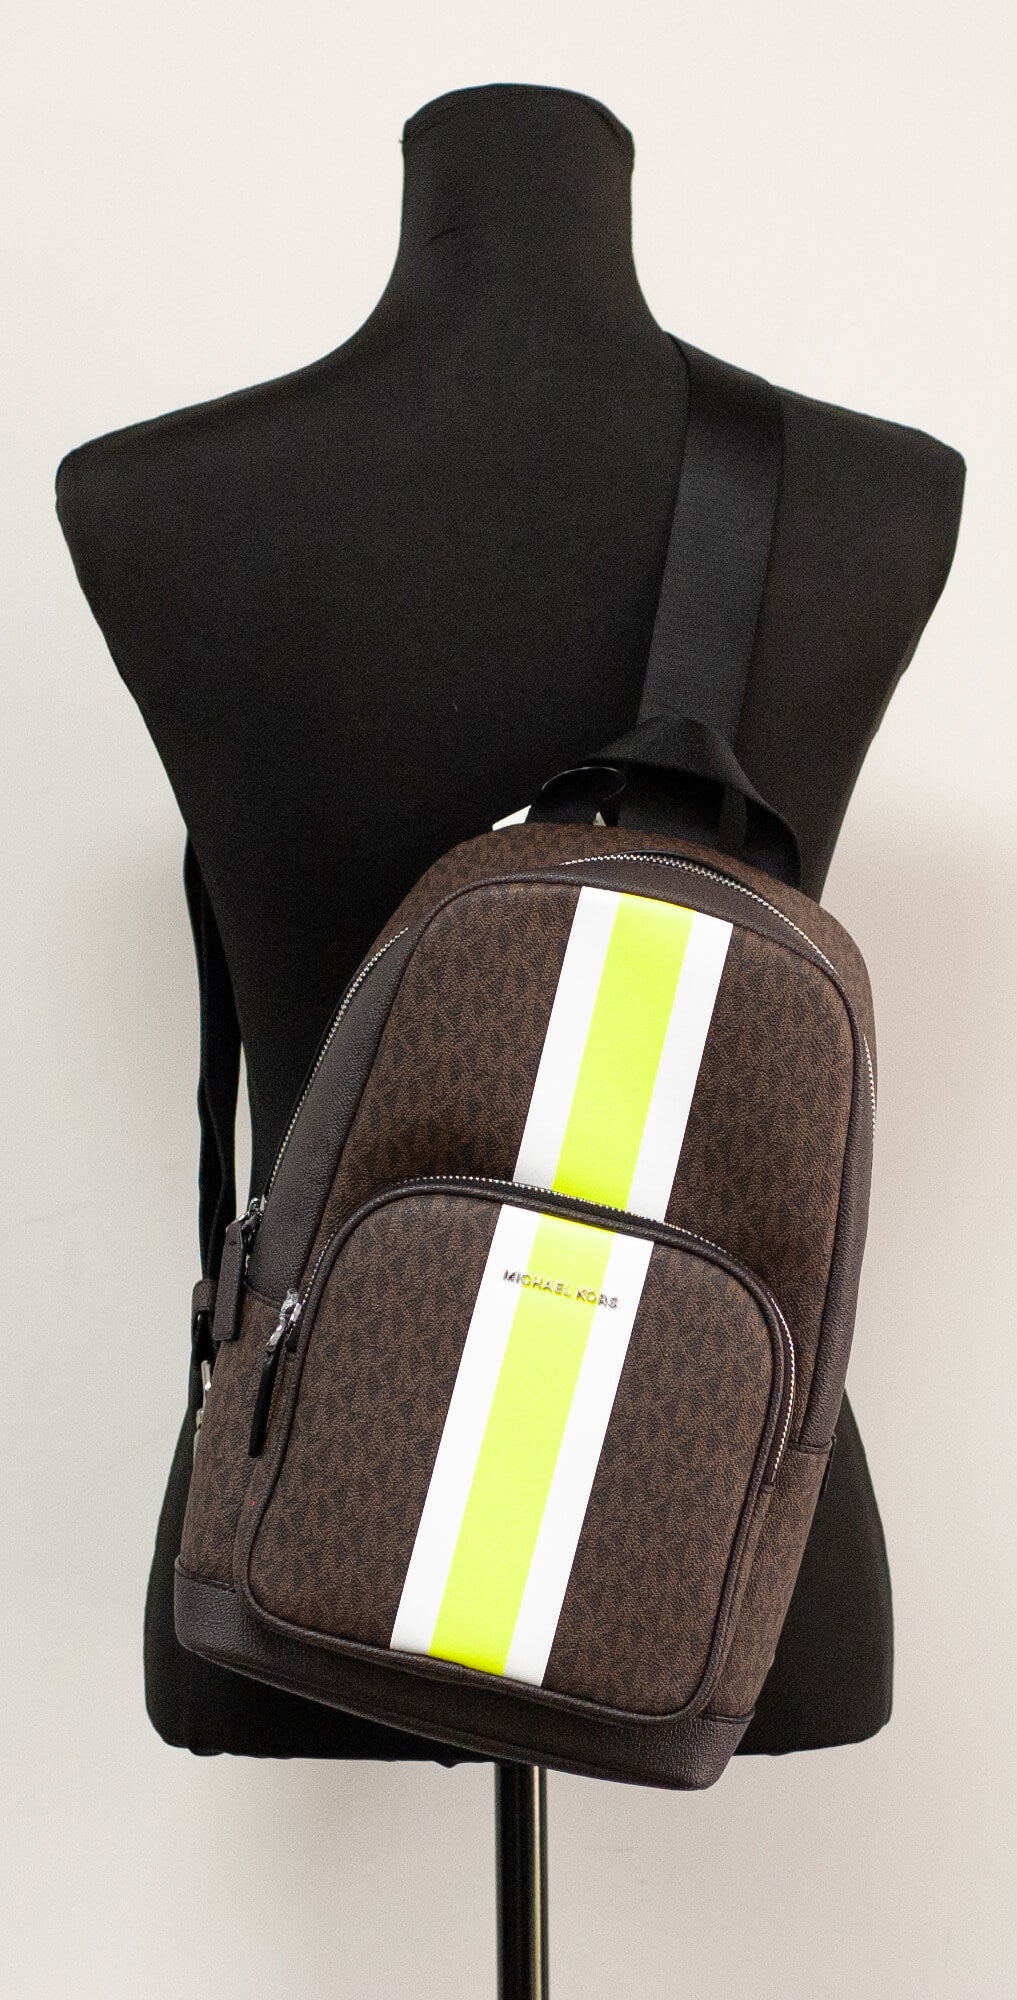 MICHAEL KORS MENS Cooper Backpack Bag Pebbled Leather in Nigeria